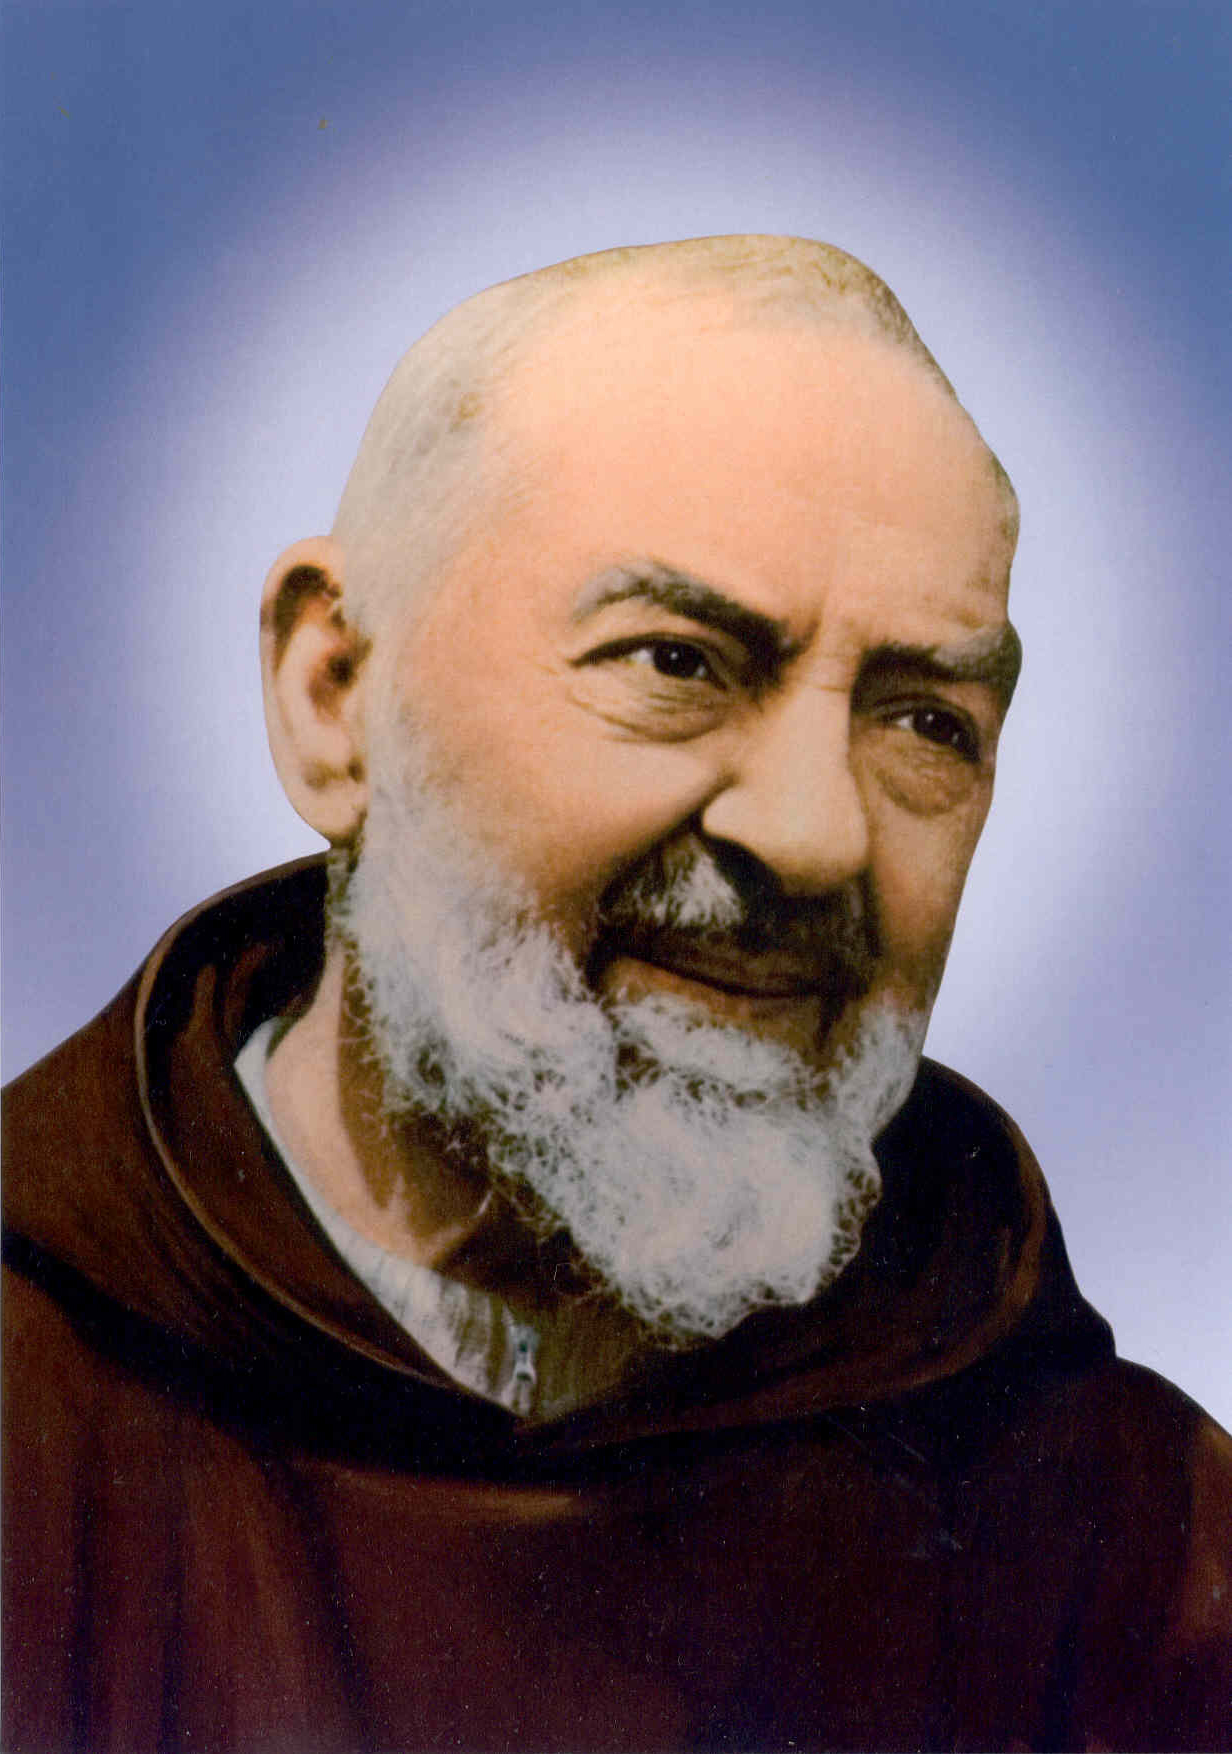  Biografi Padre Pio